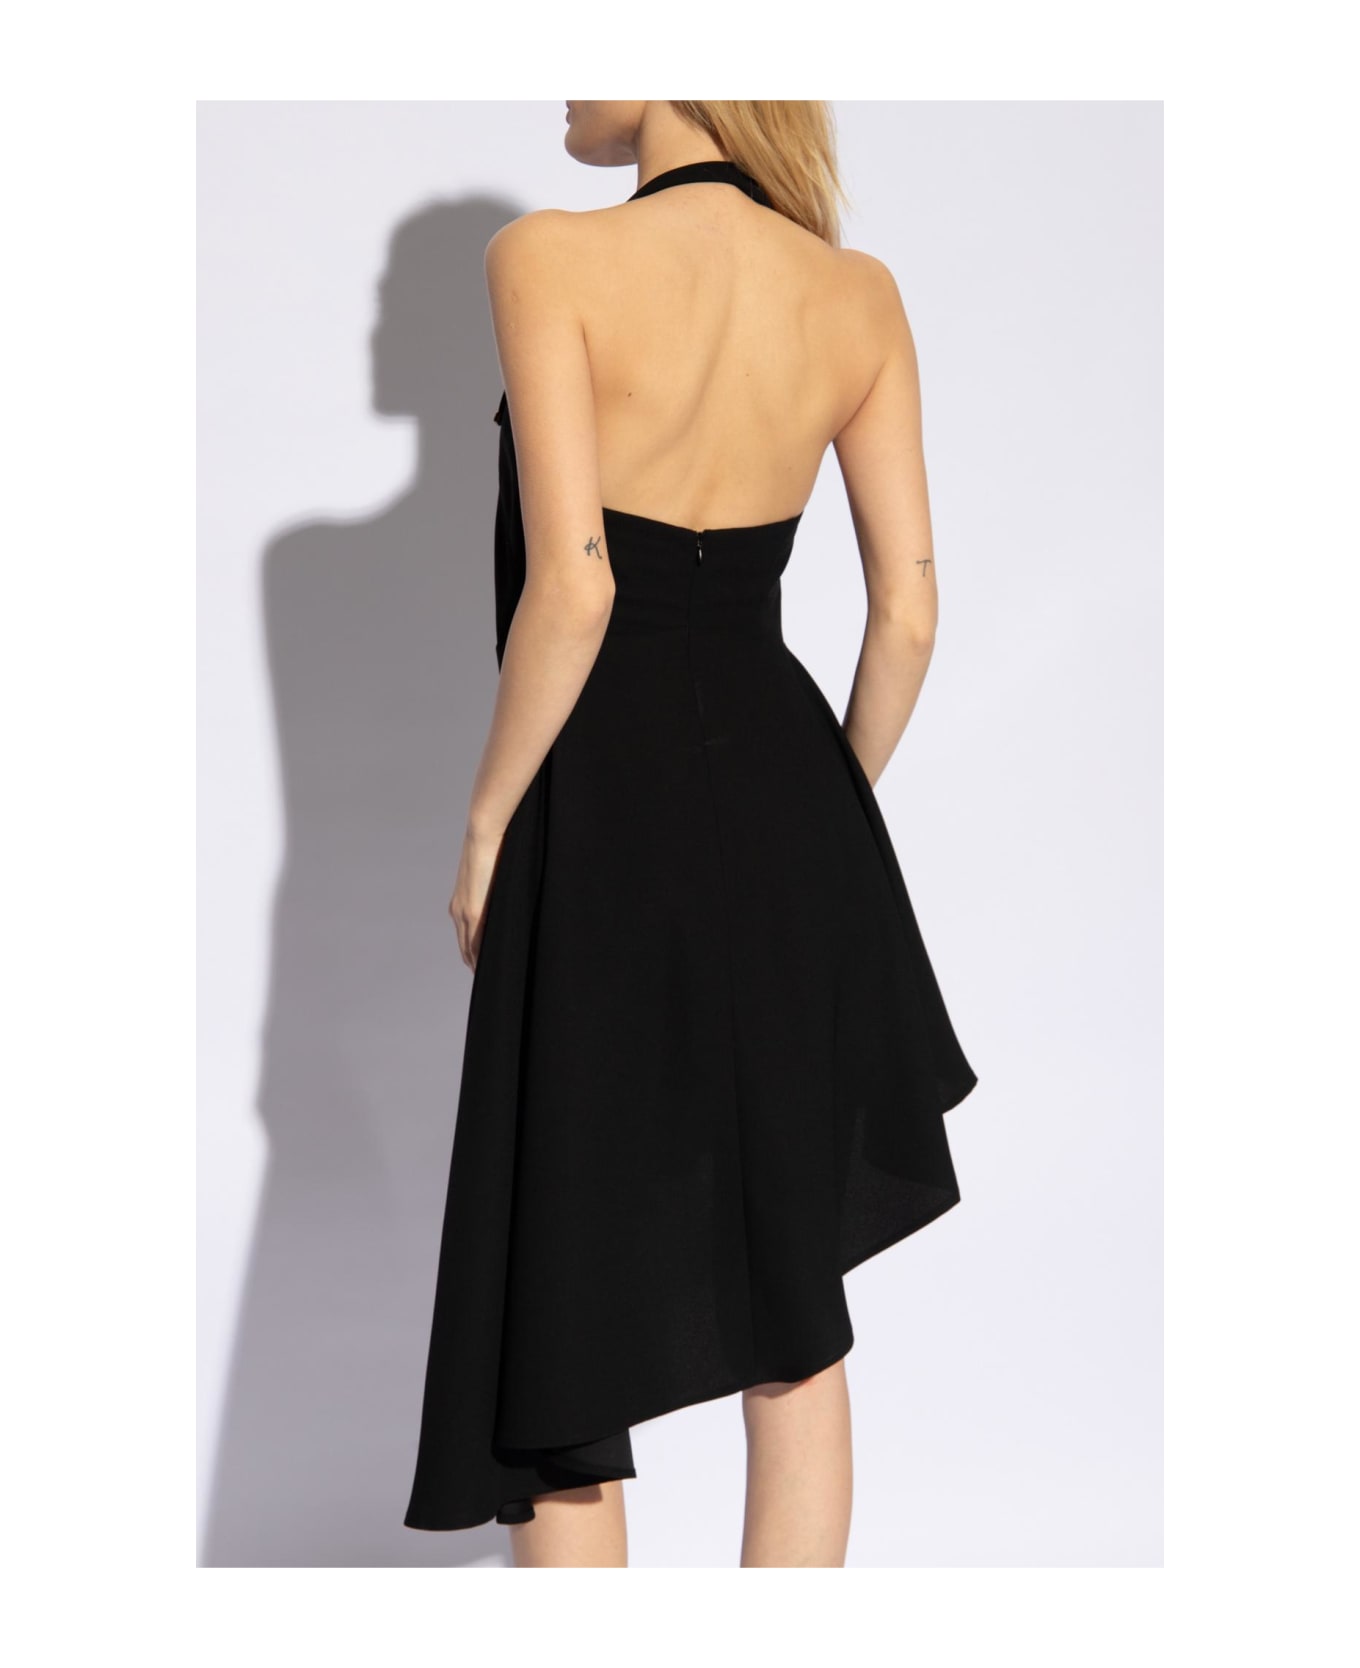 Versace Jeans Couture Asymmetrical Dress - Black